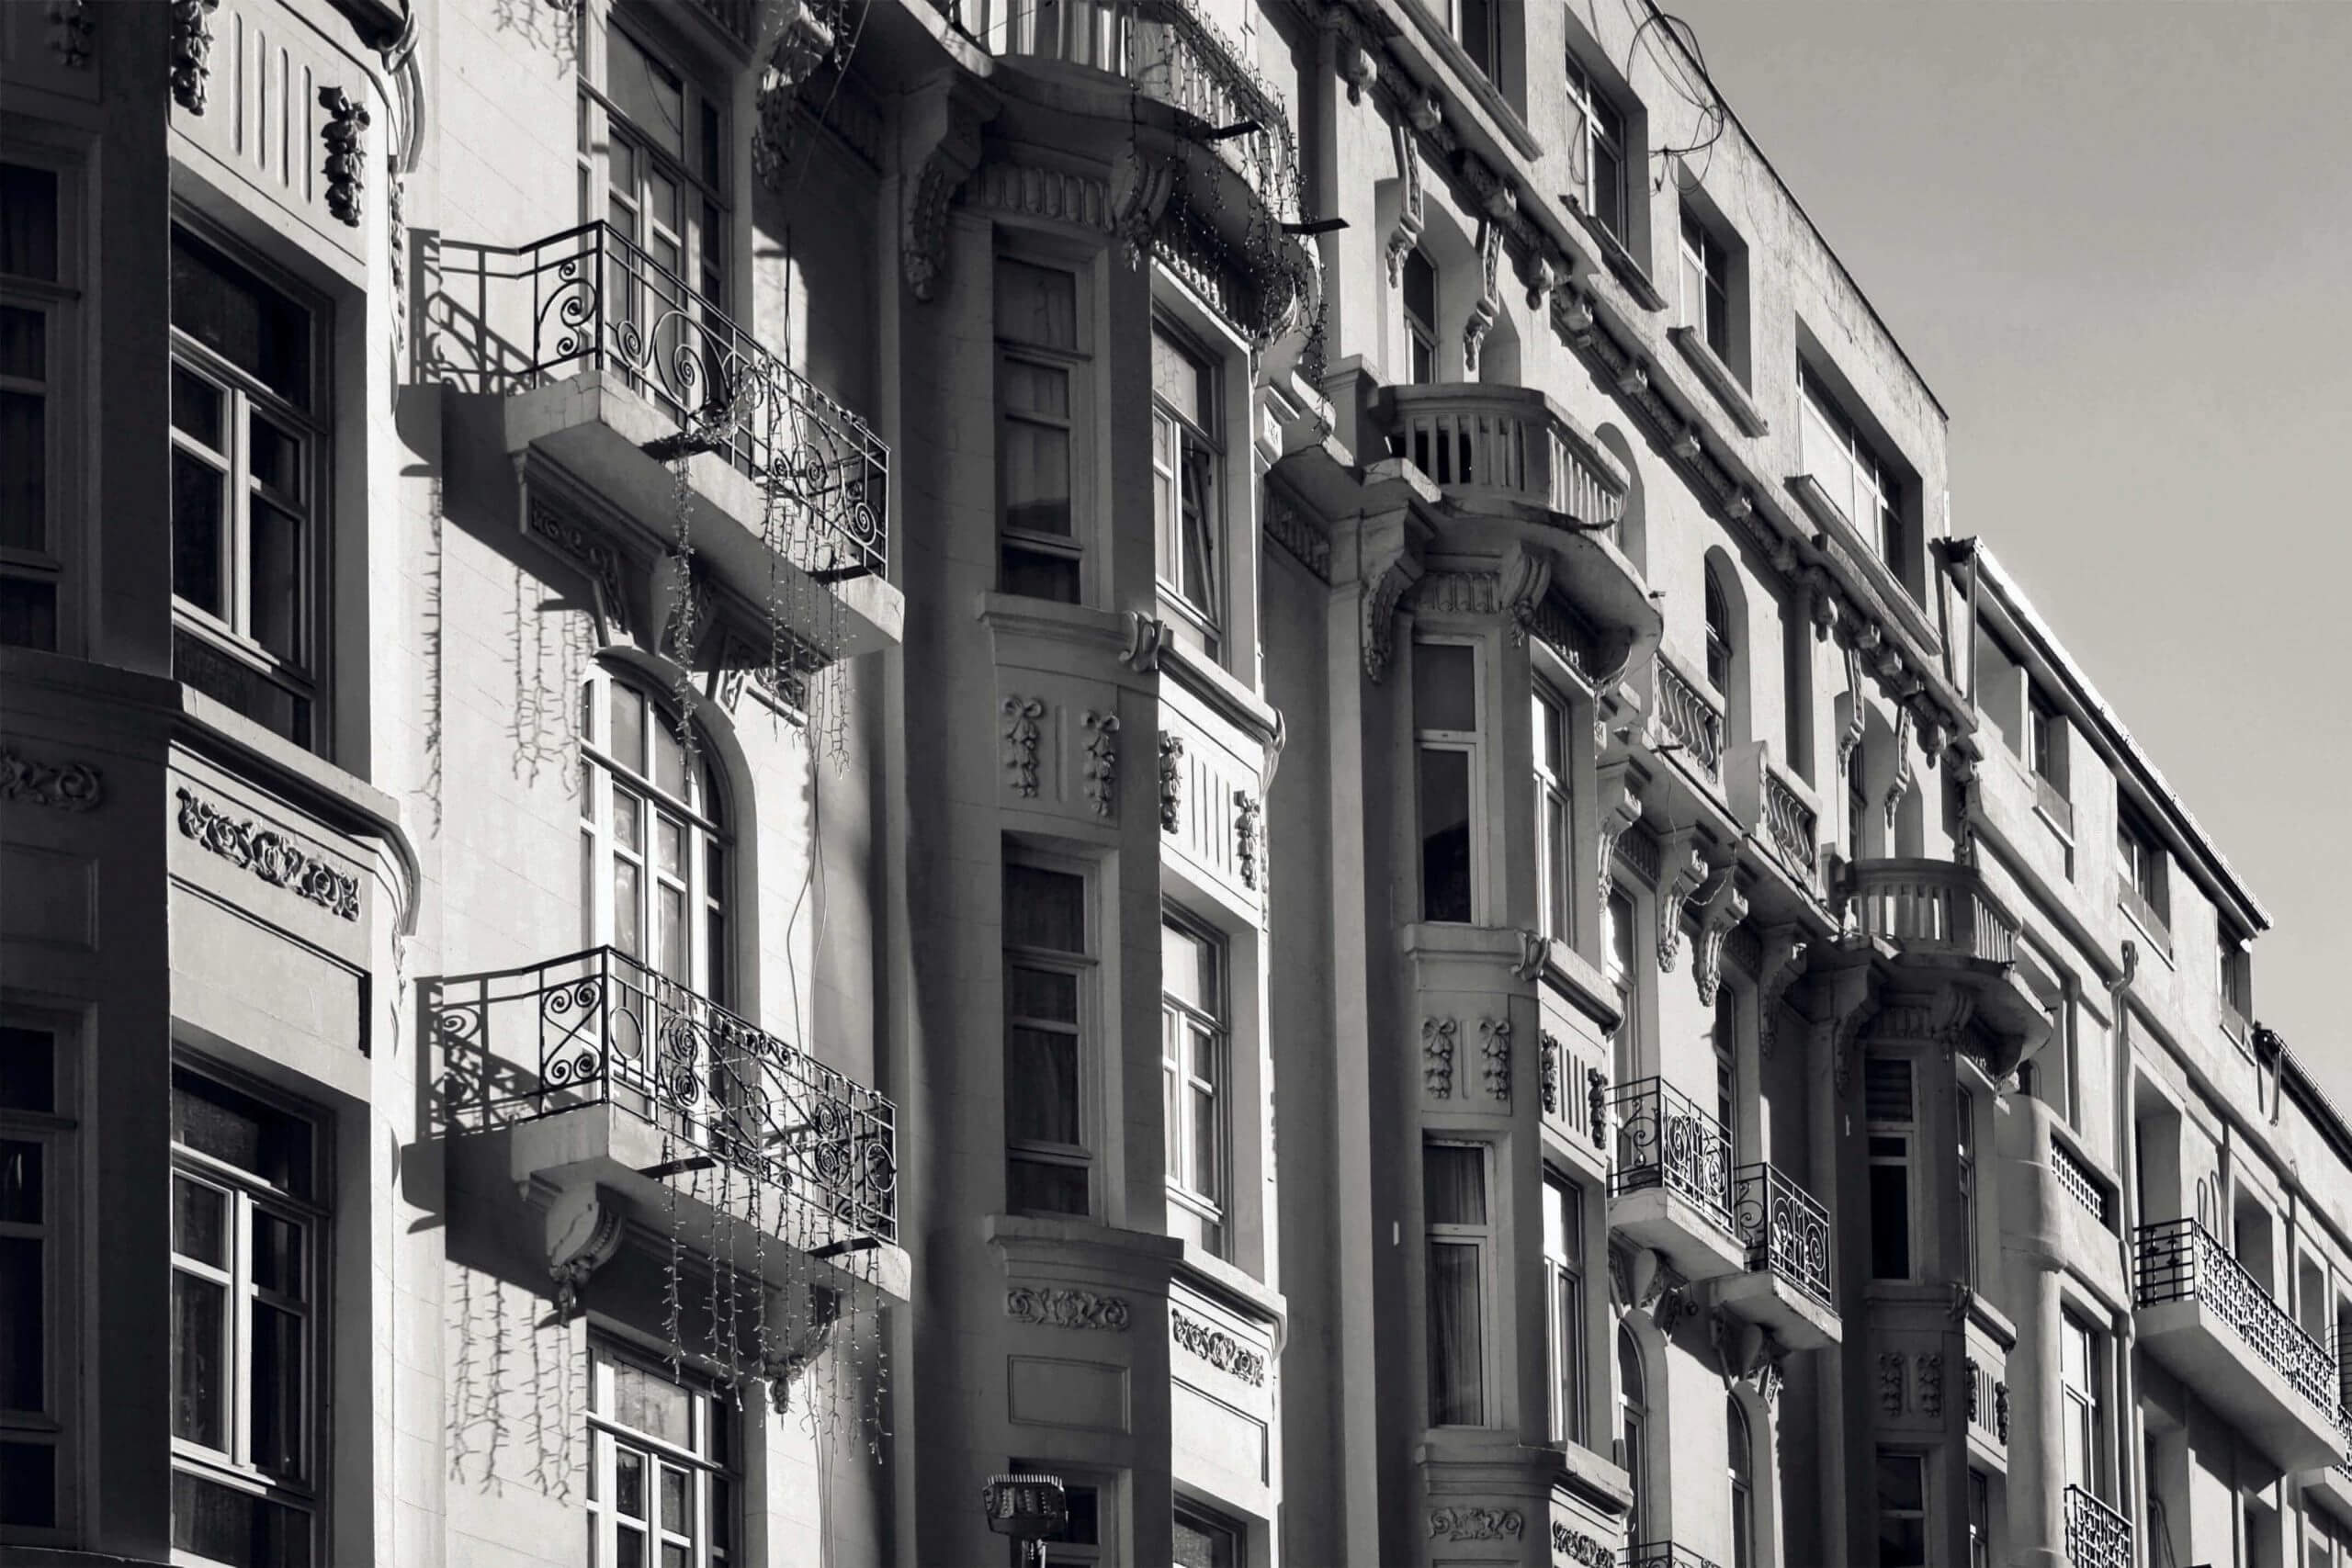 Ritz Carlton Residences Istanbul Apartments for sale in Nisantasi